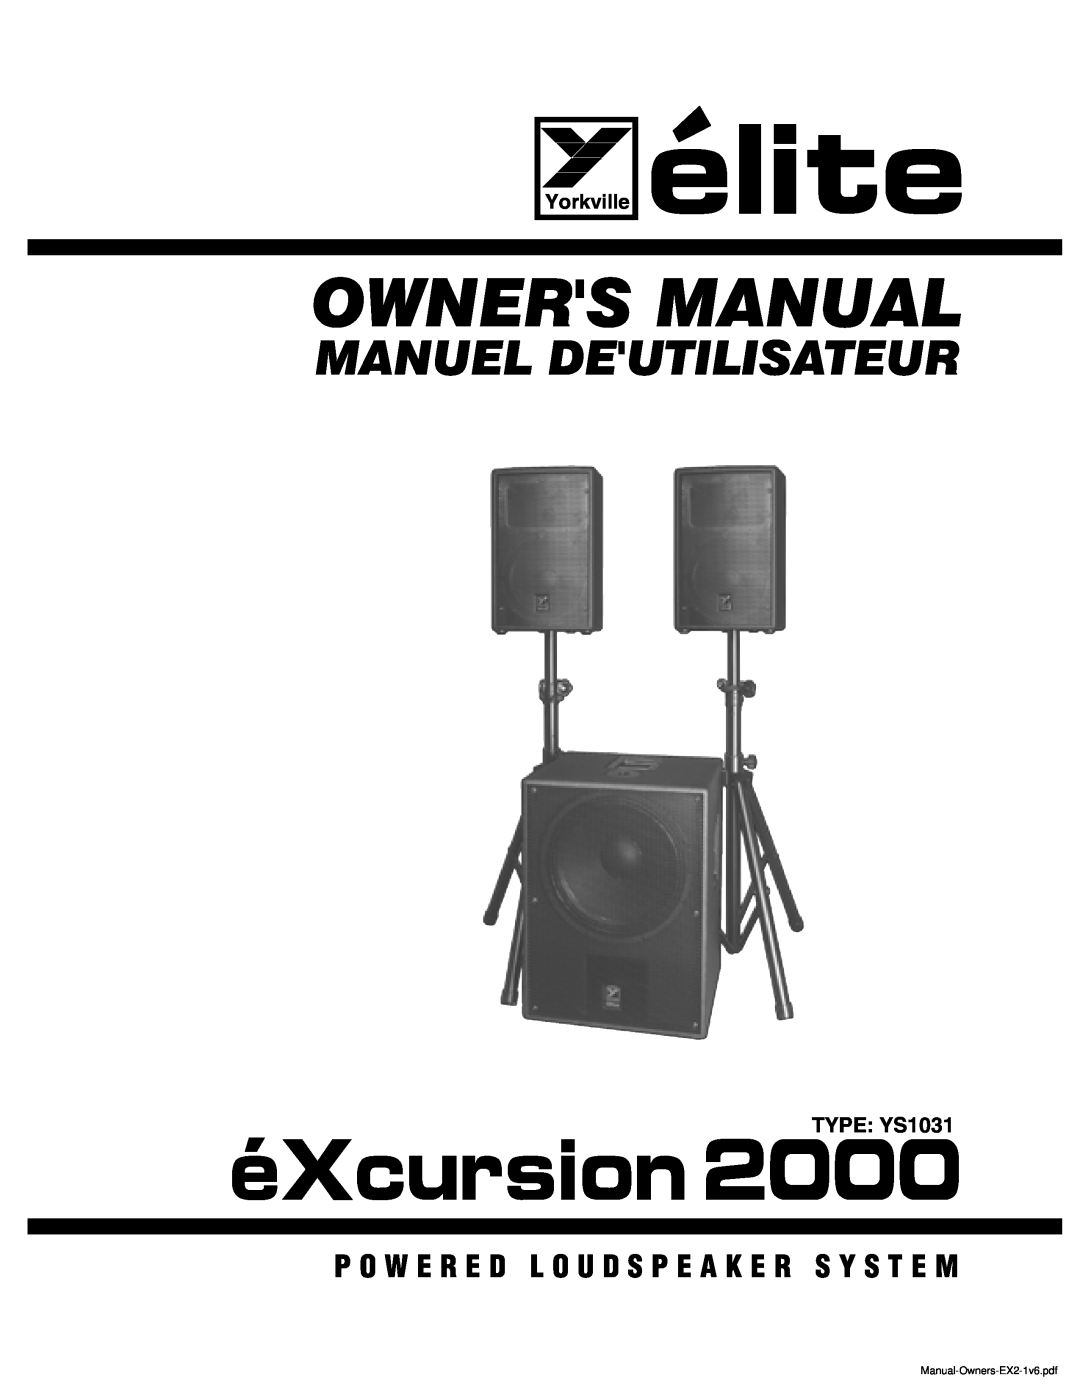 Yorkville Sound owner manual TYPE YS1031, Yorkville, éXcursion, Manuel Deutilisateur 